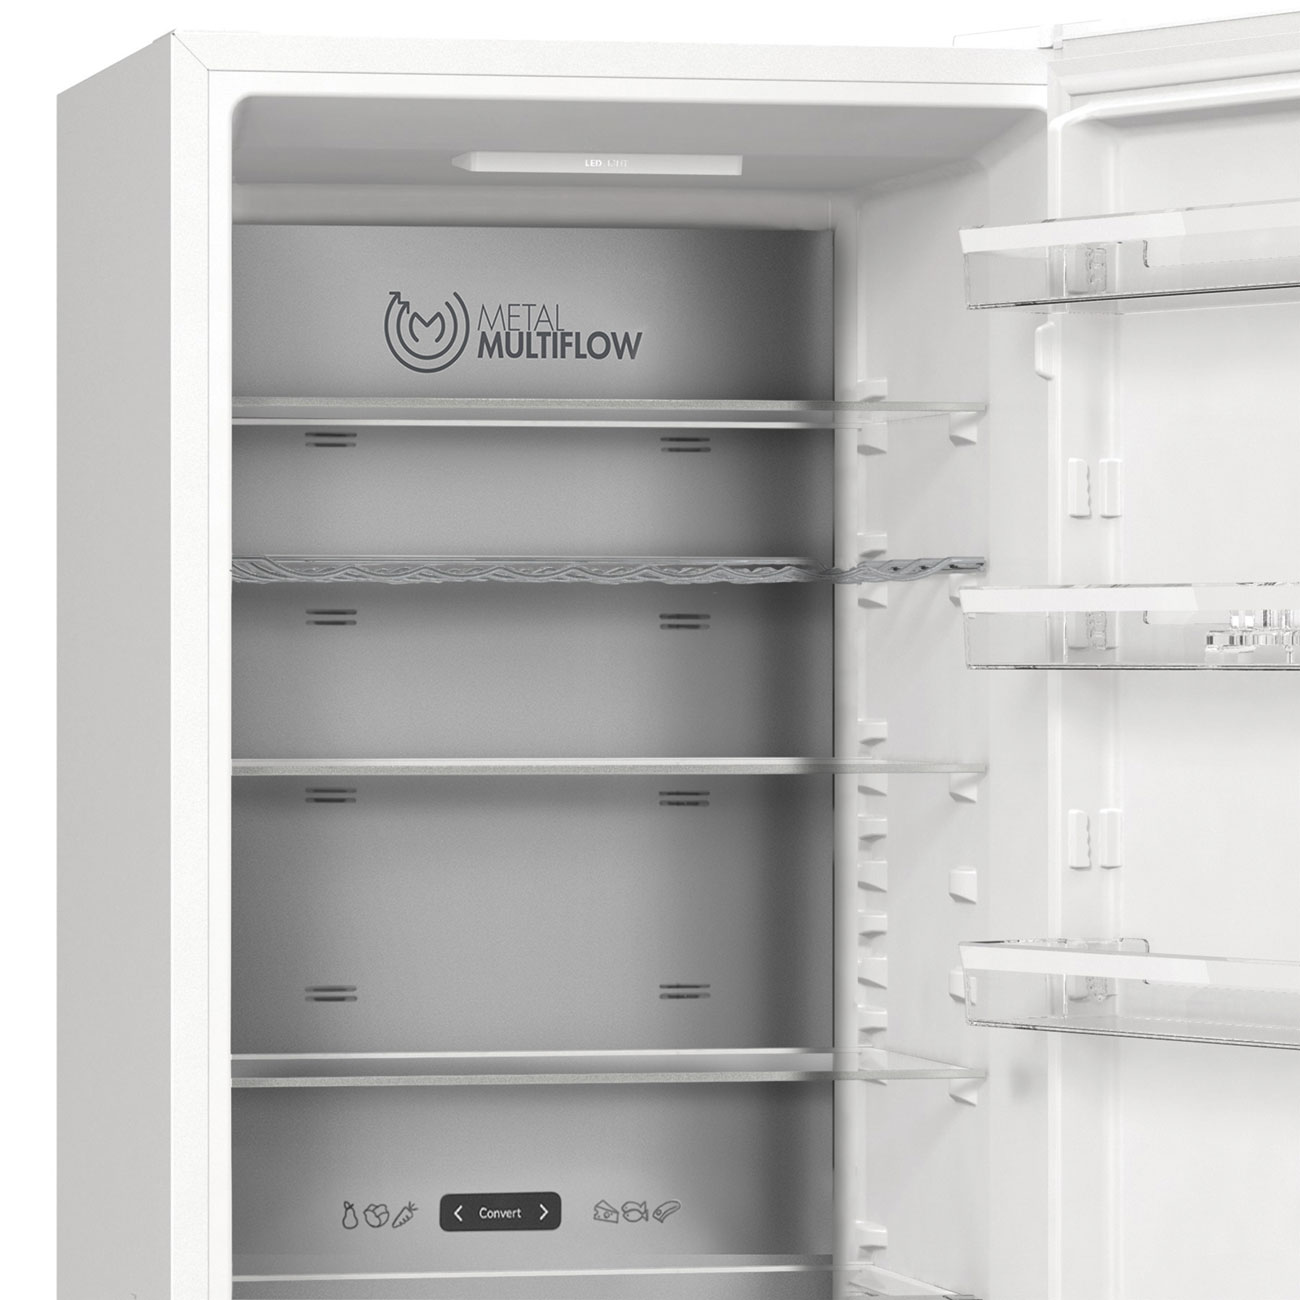 Bottom Mount Free standing refrigerator - Smeg_7